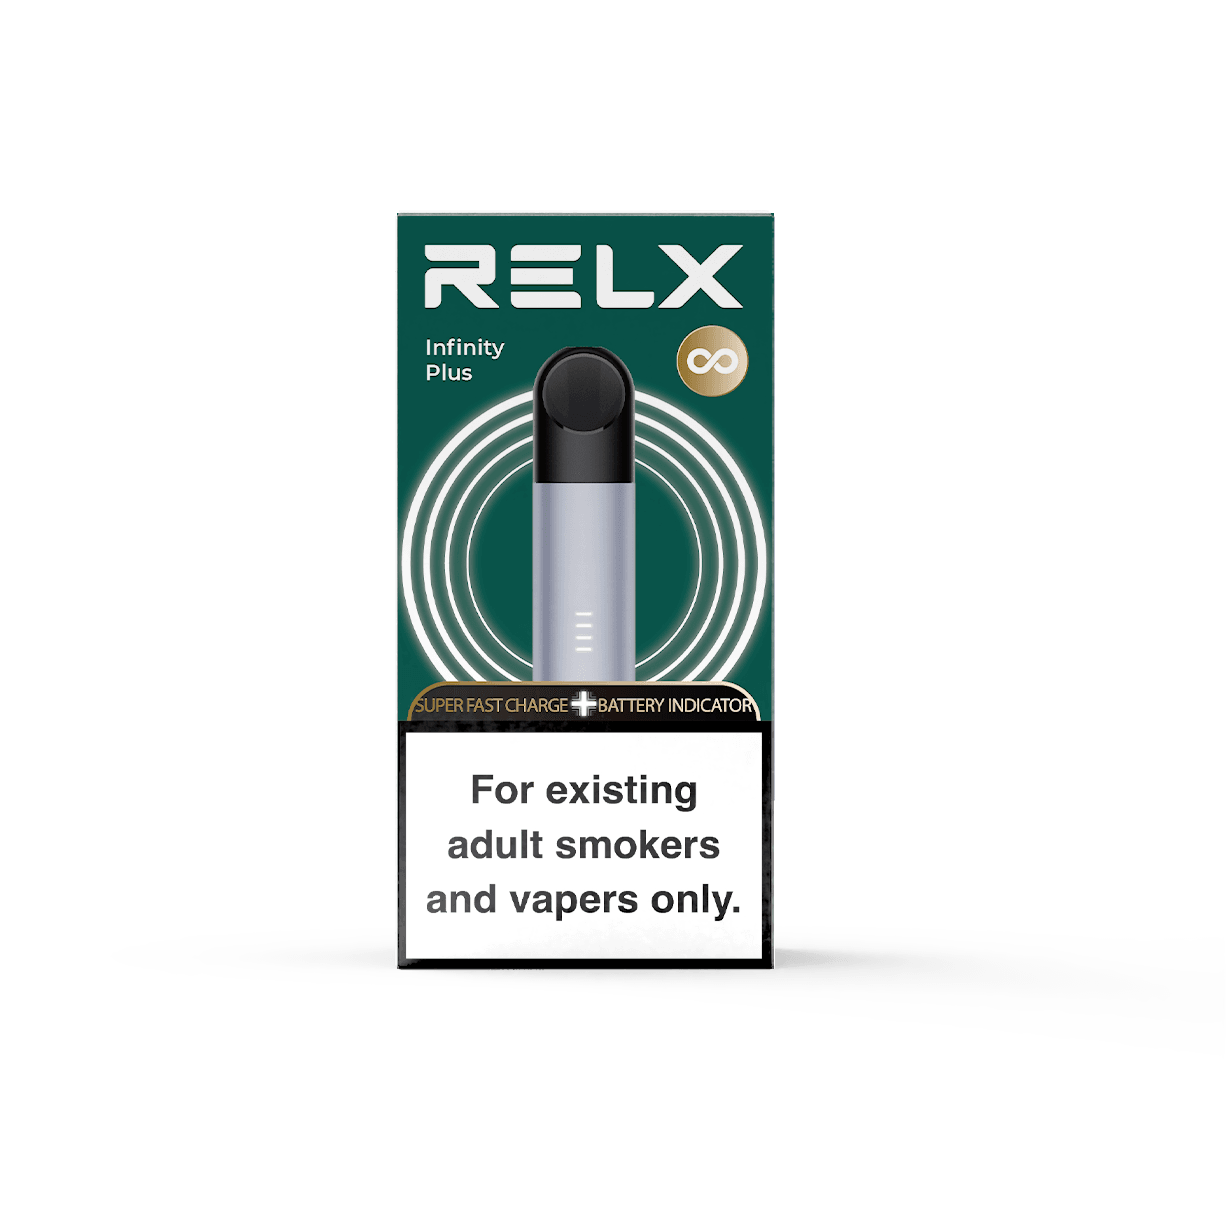 RELX Infinity Plus - RELX Global